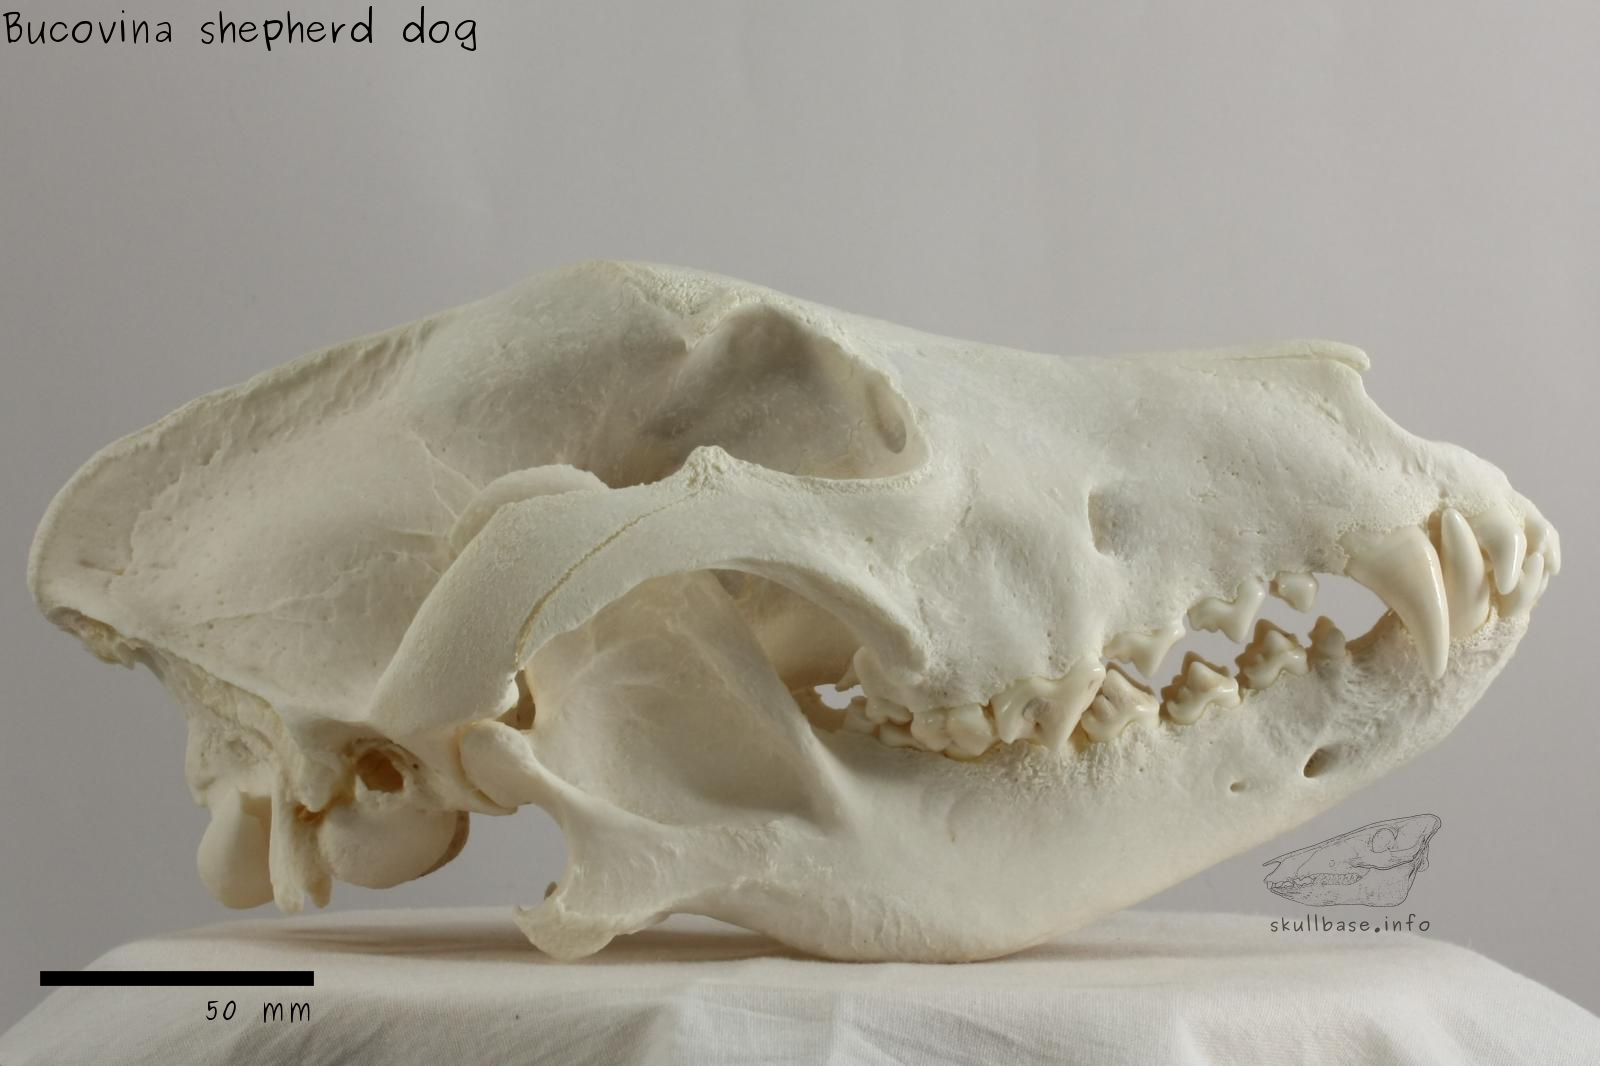 Bucovina shepherd dog (Canis lupus familiaris) skull lateral view